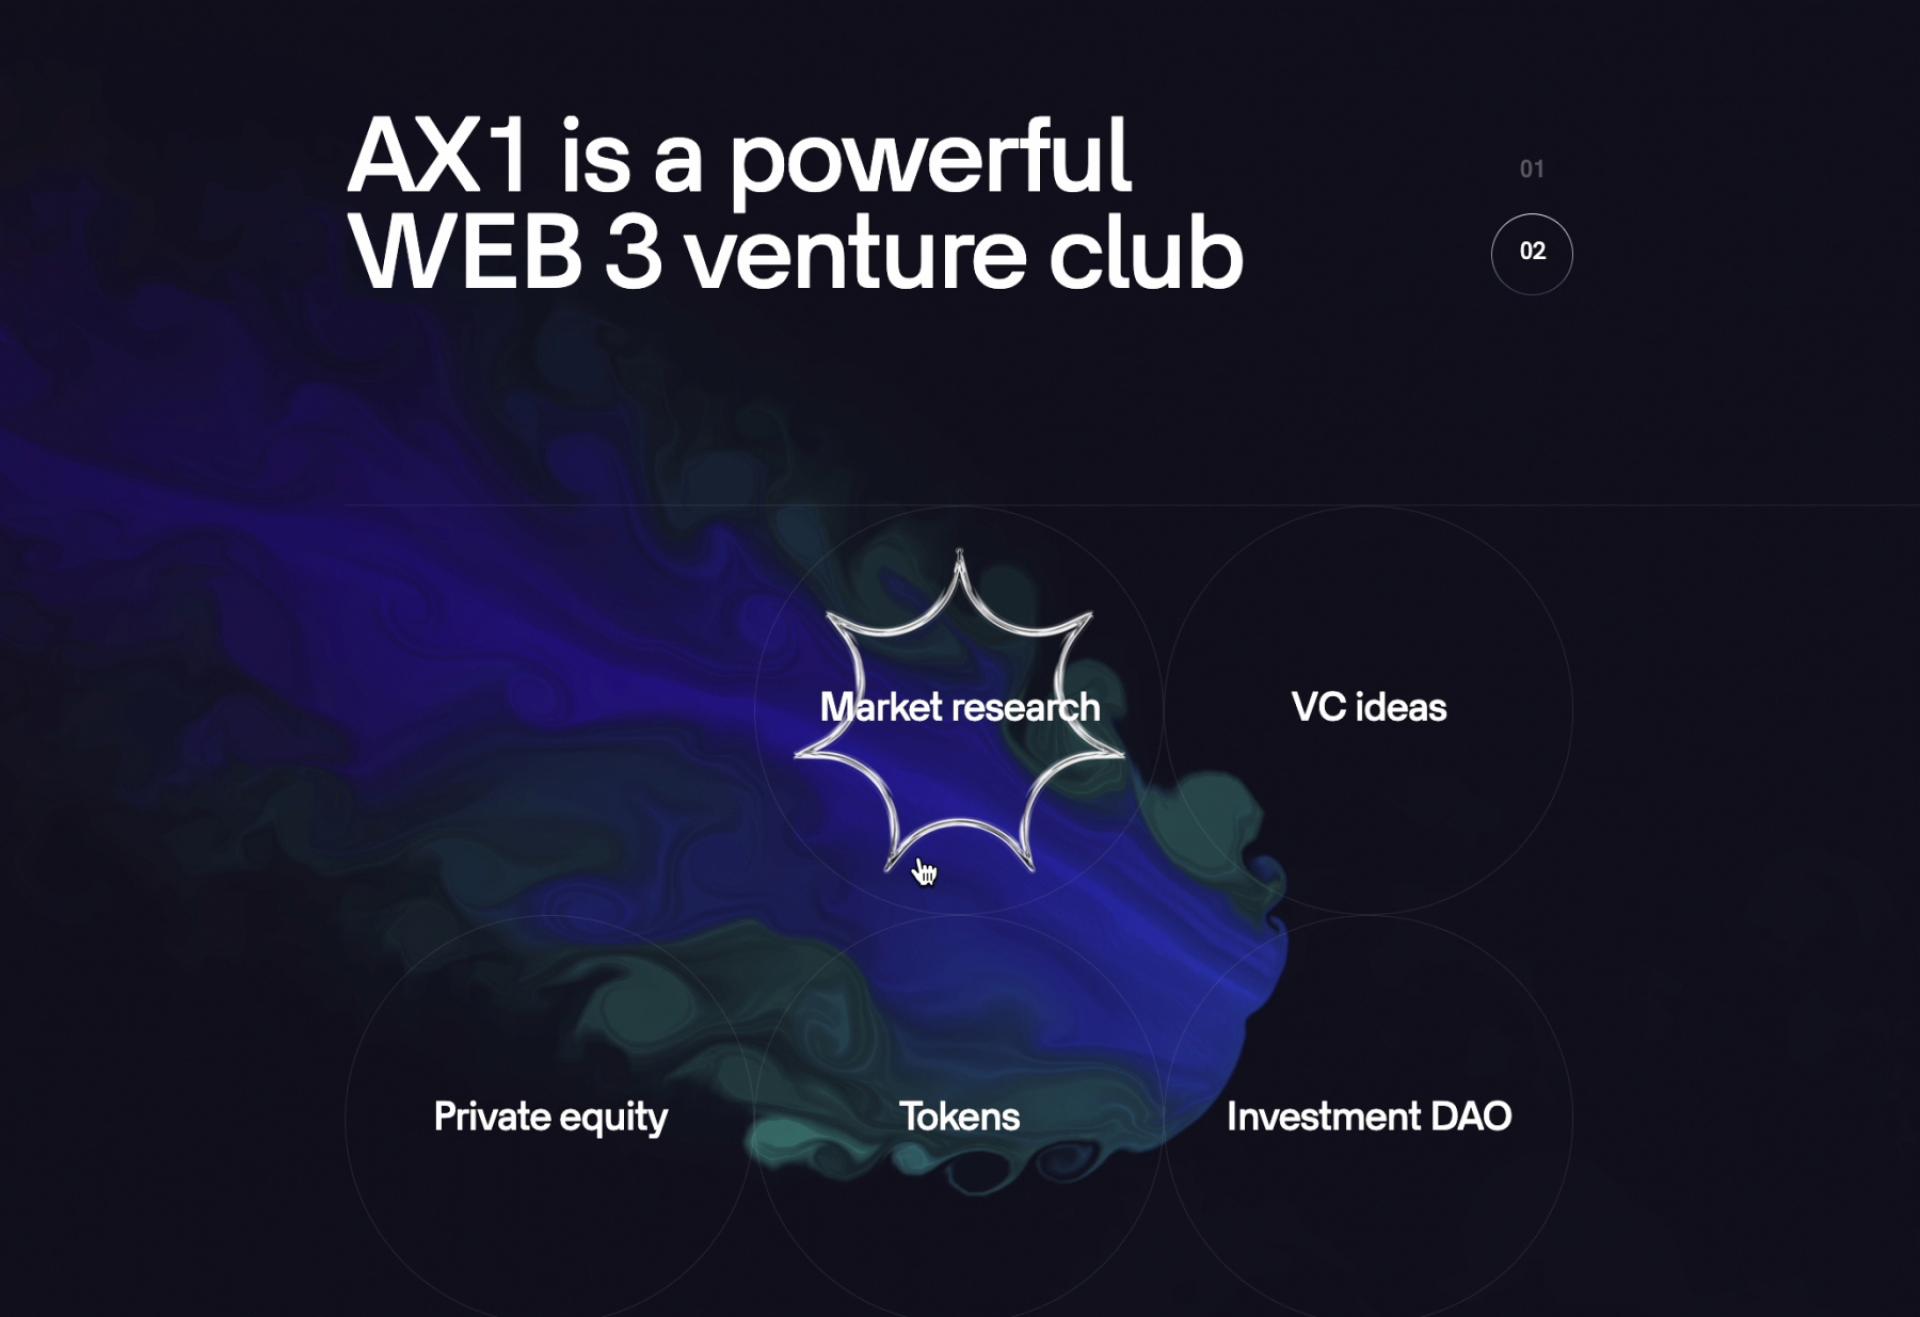 Vega Digital Awards Winner - AX1 venture club, Design with Alice K